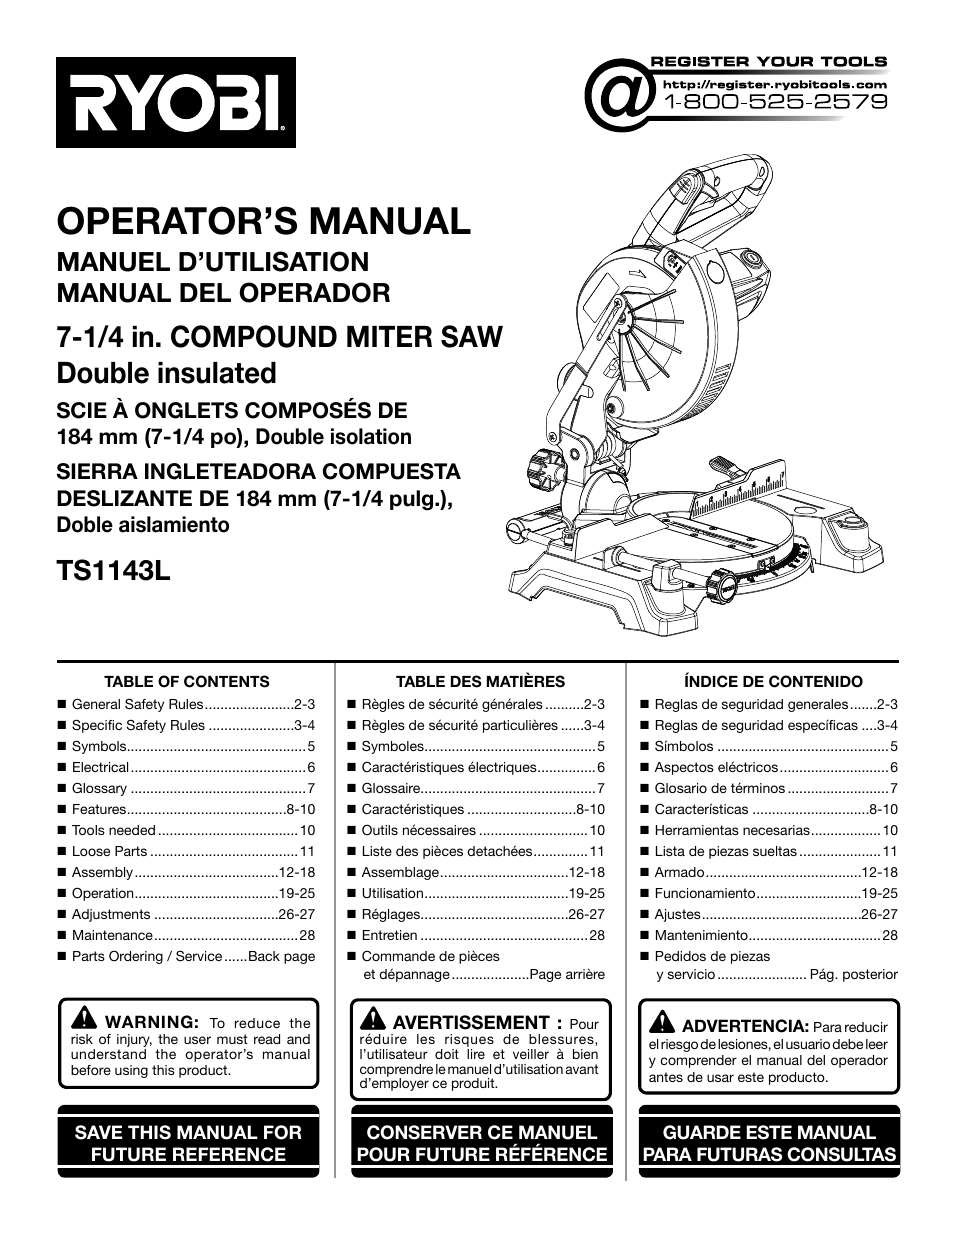 Ryobi TS1143L User Manual | 84 pages